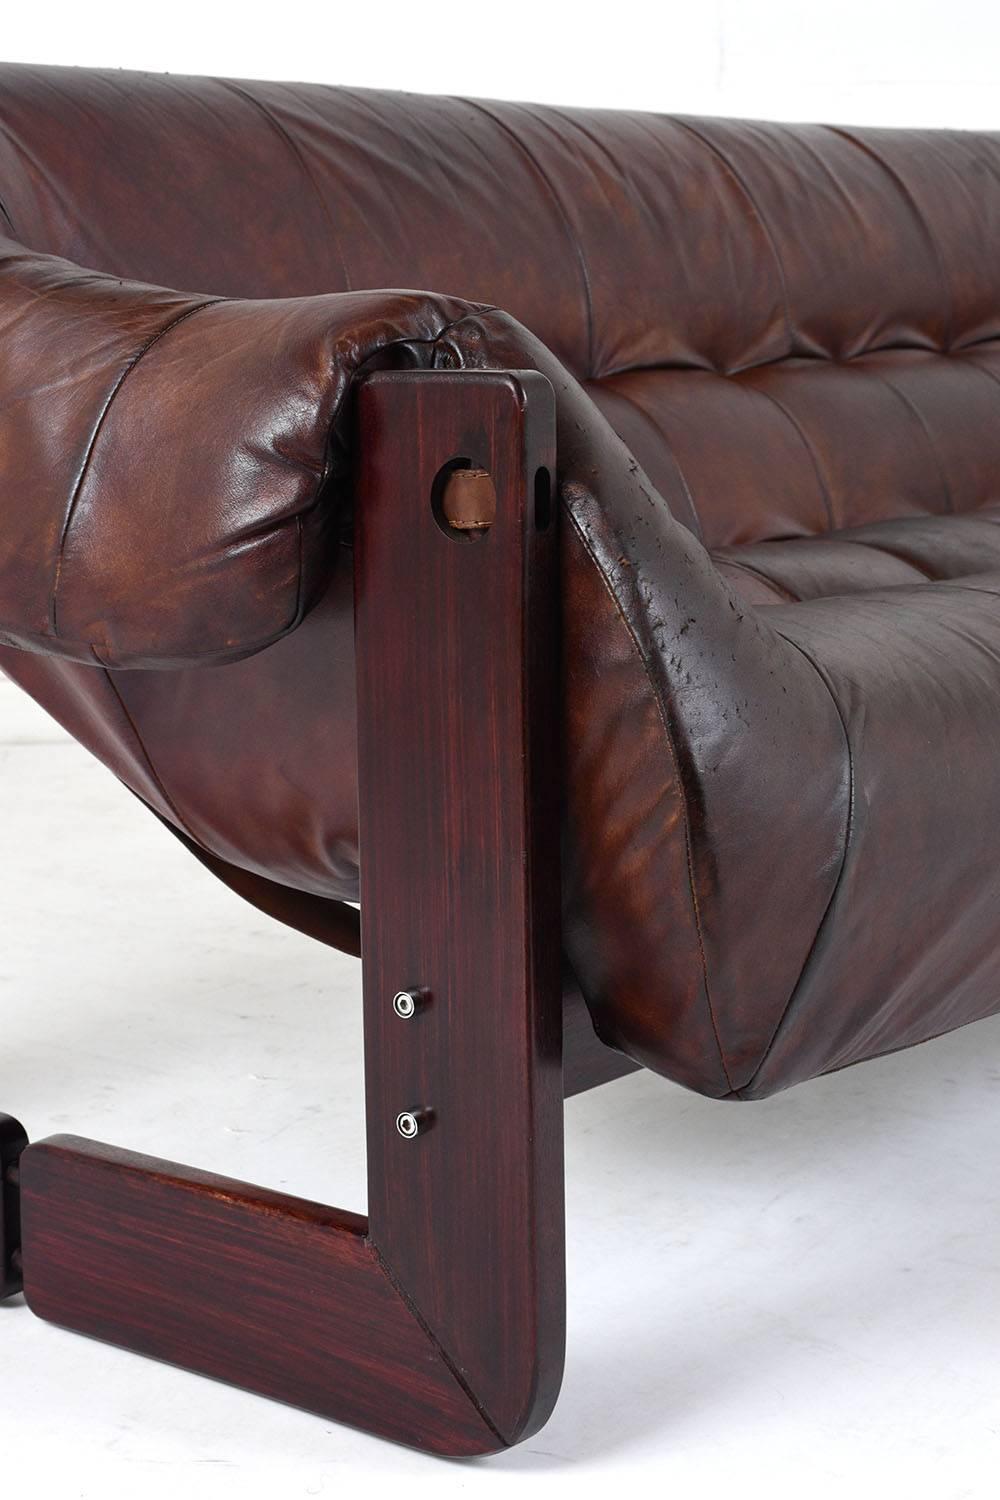 Percival Lafer Leather Sofa 3